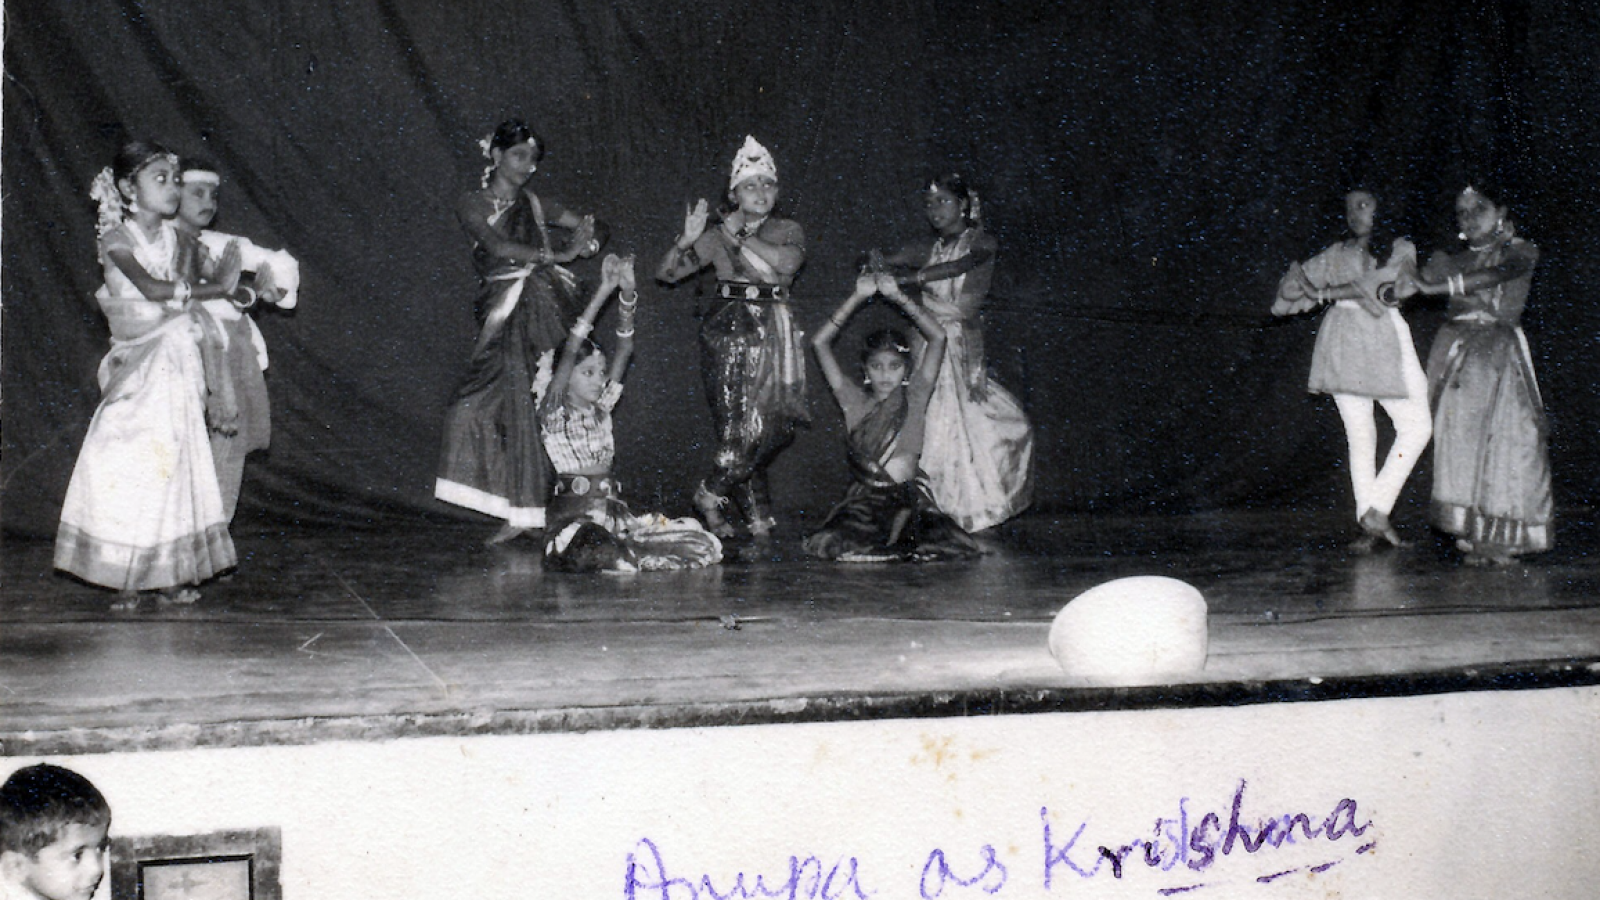 Anupa dancing as Krishna